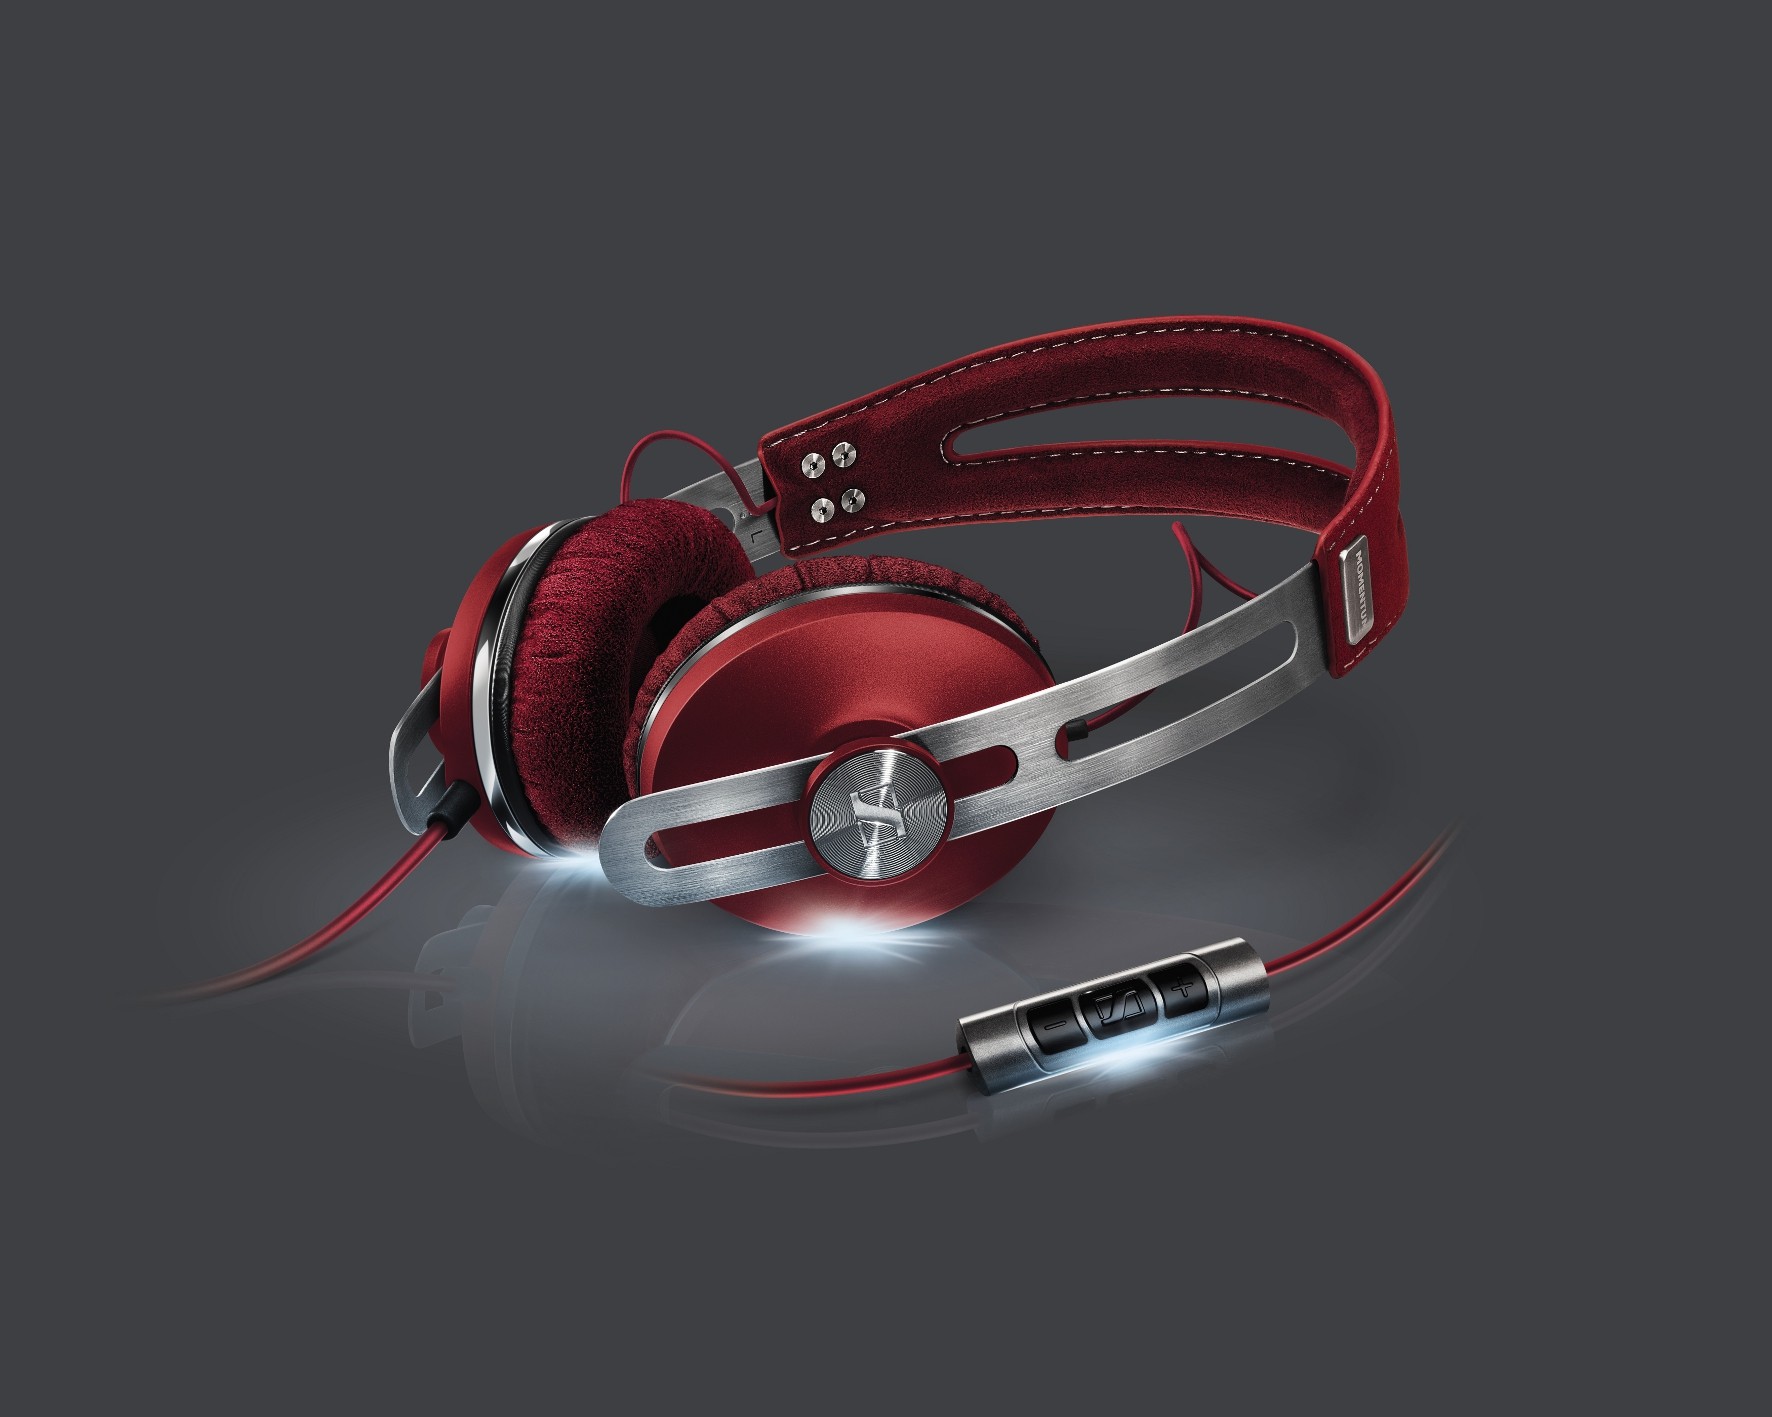 New Black, Brown and Red Sennheiser MOMENTUM On-Ear Headphones